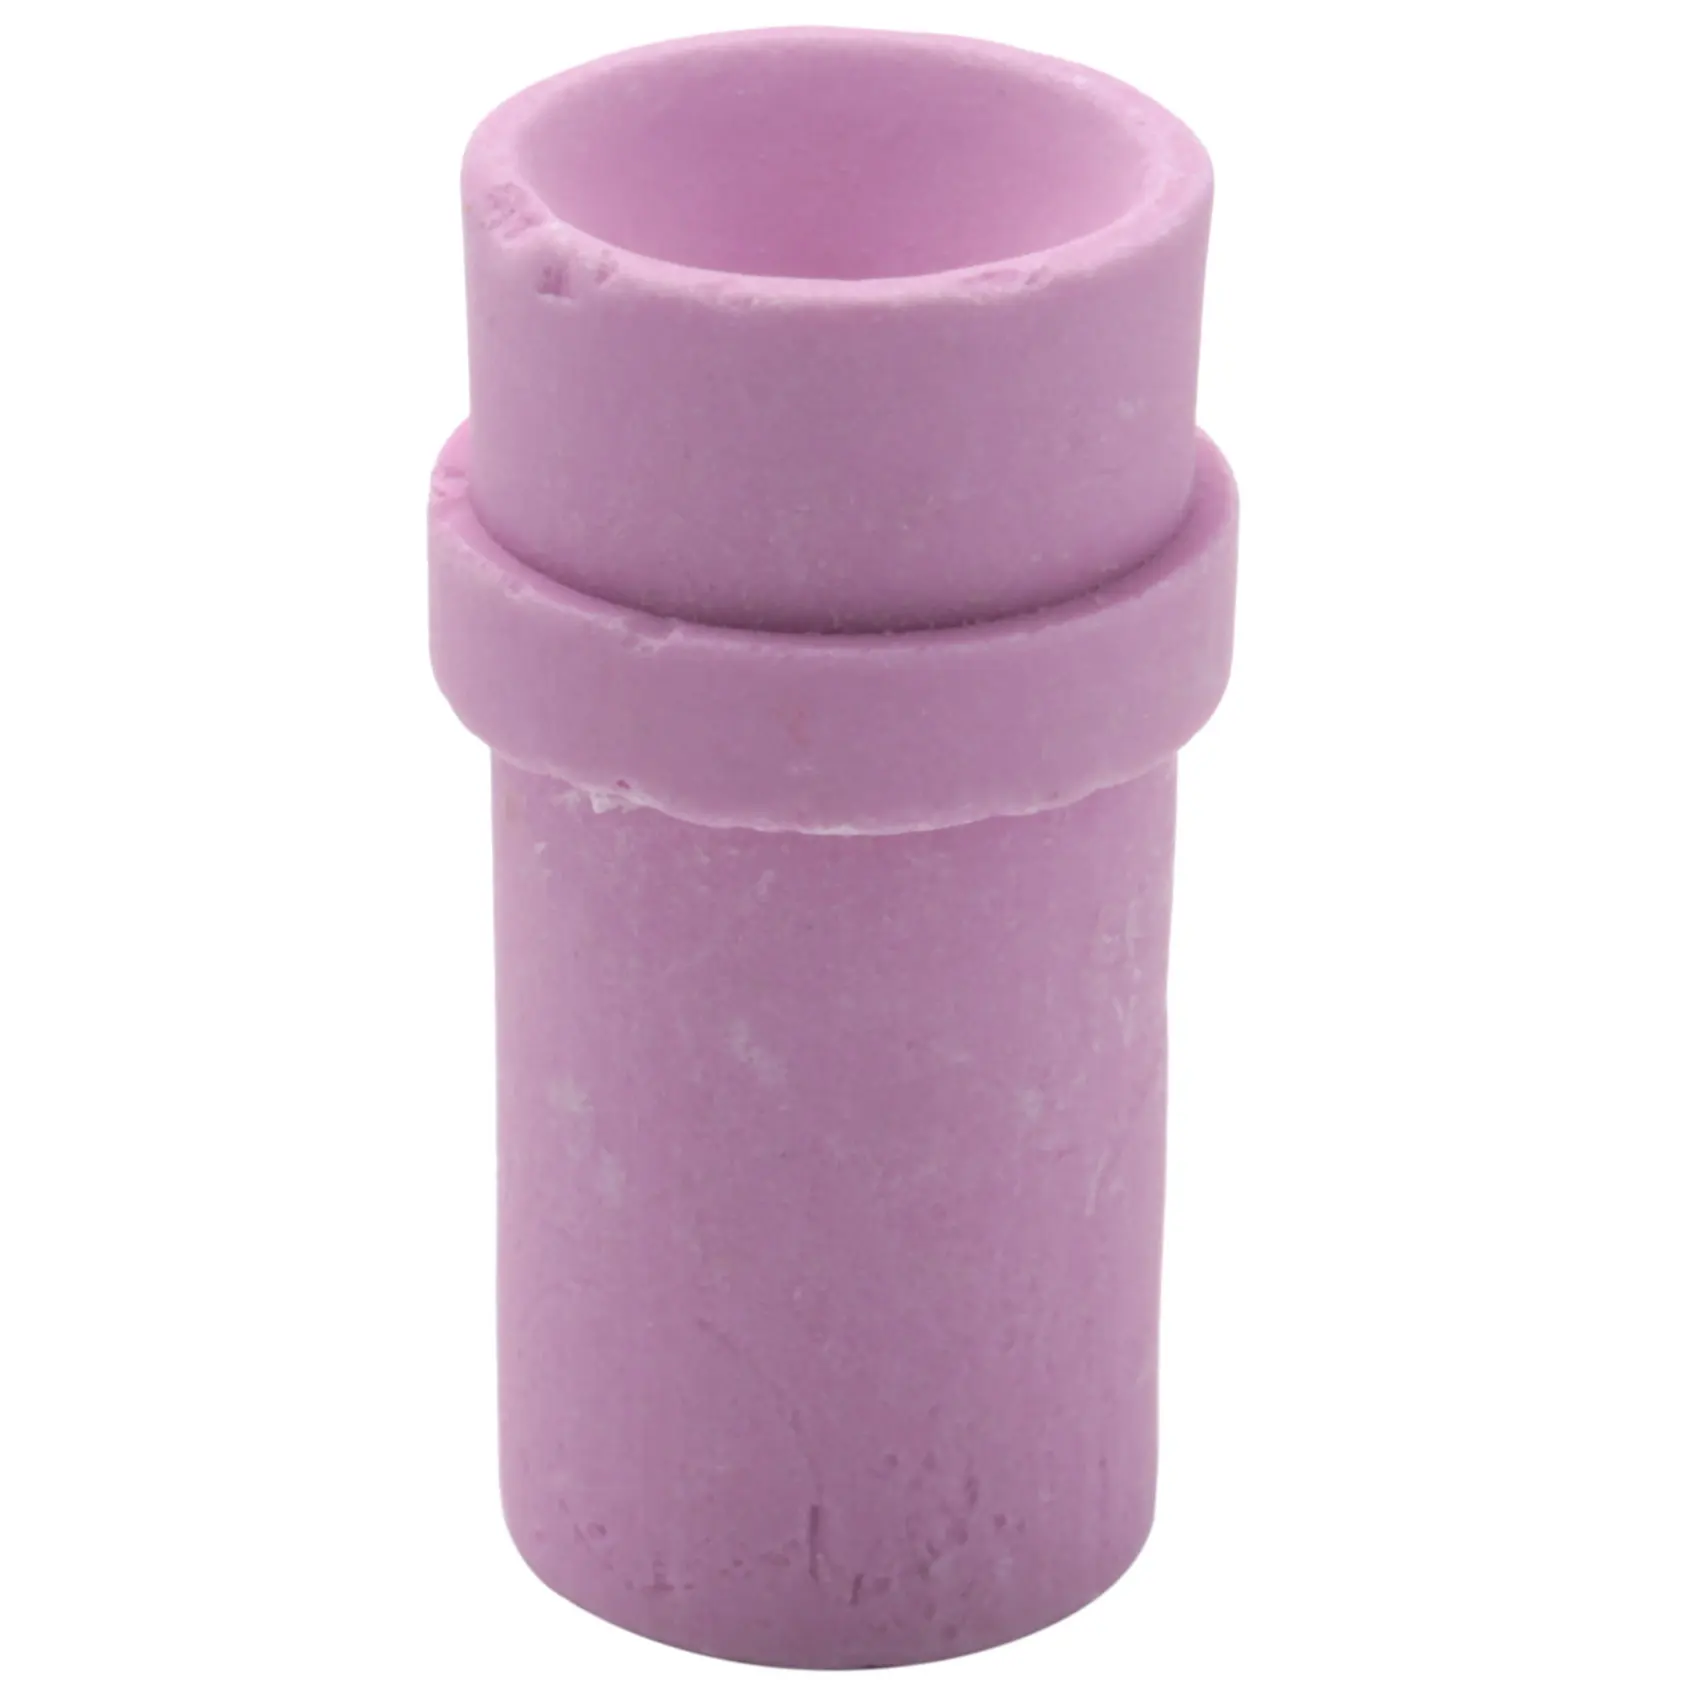 

20 Pcs 4.5mm Sandblaster Tips to Replace Air Sandblasting Ceramic Nozzle